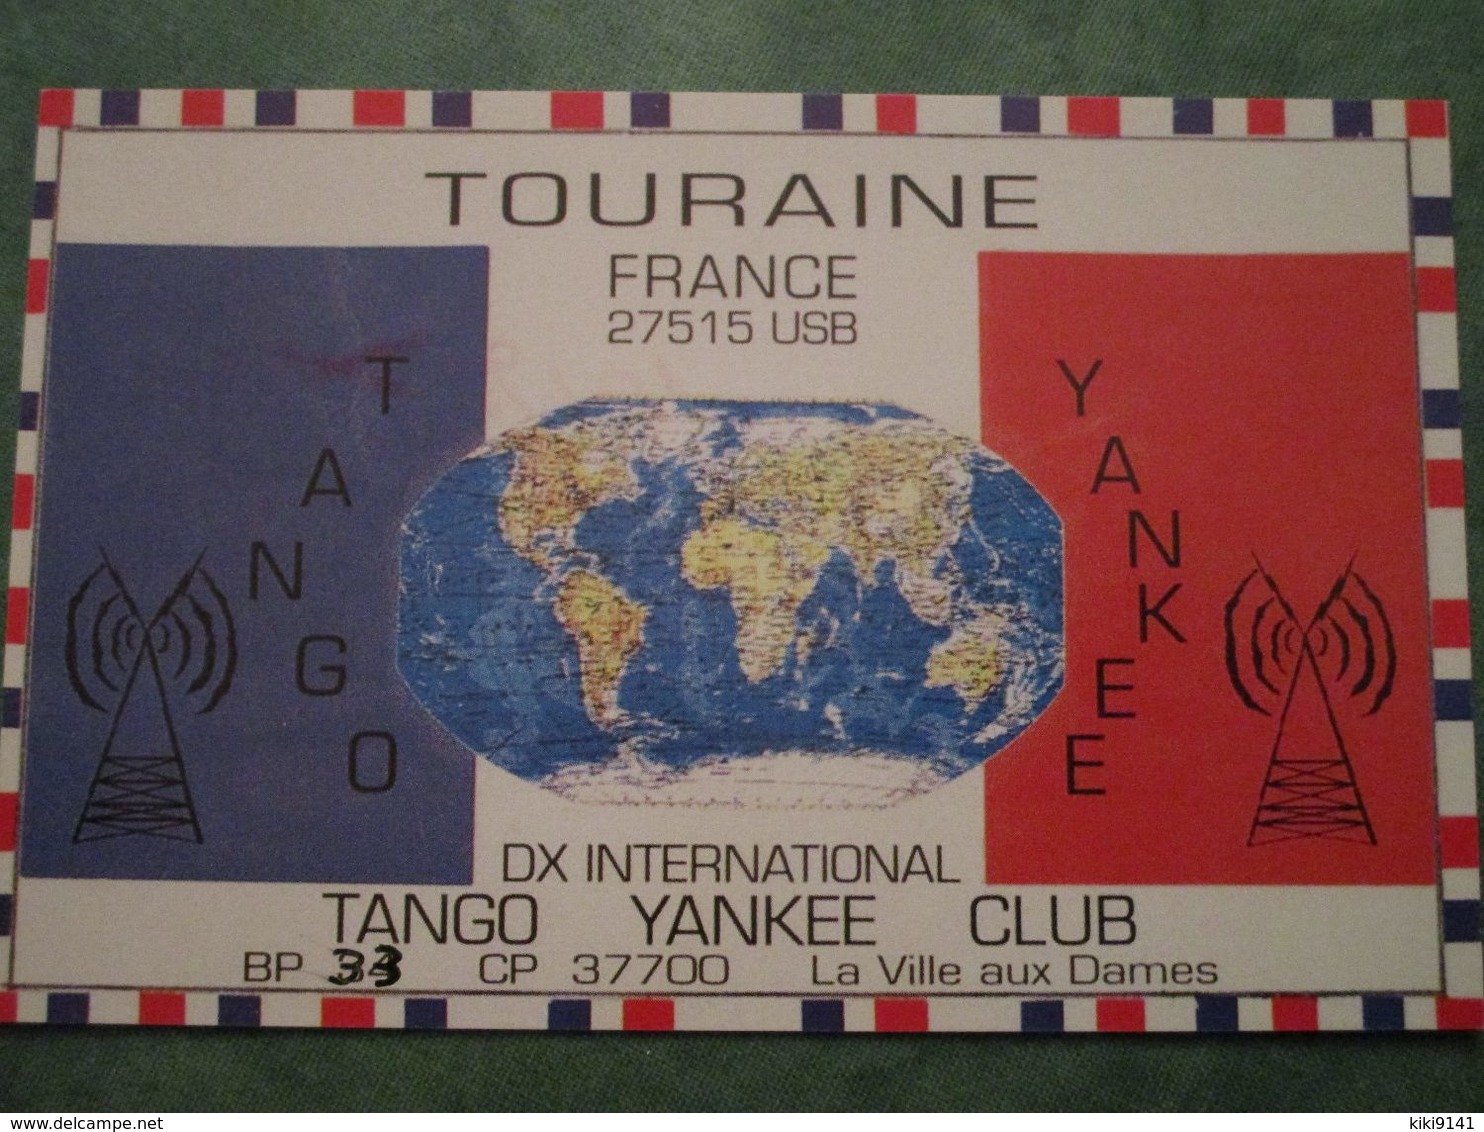 DX INTERNATIONAL - TANGO YANKEE CLUB - Radio